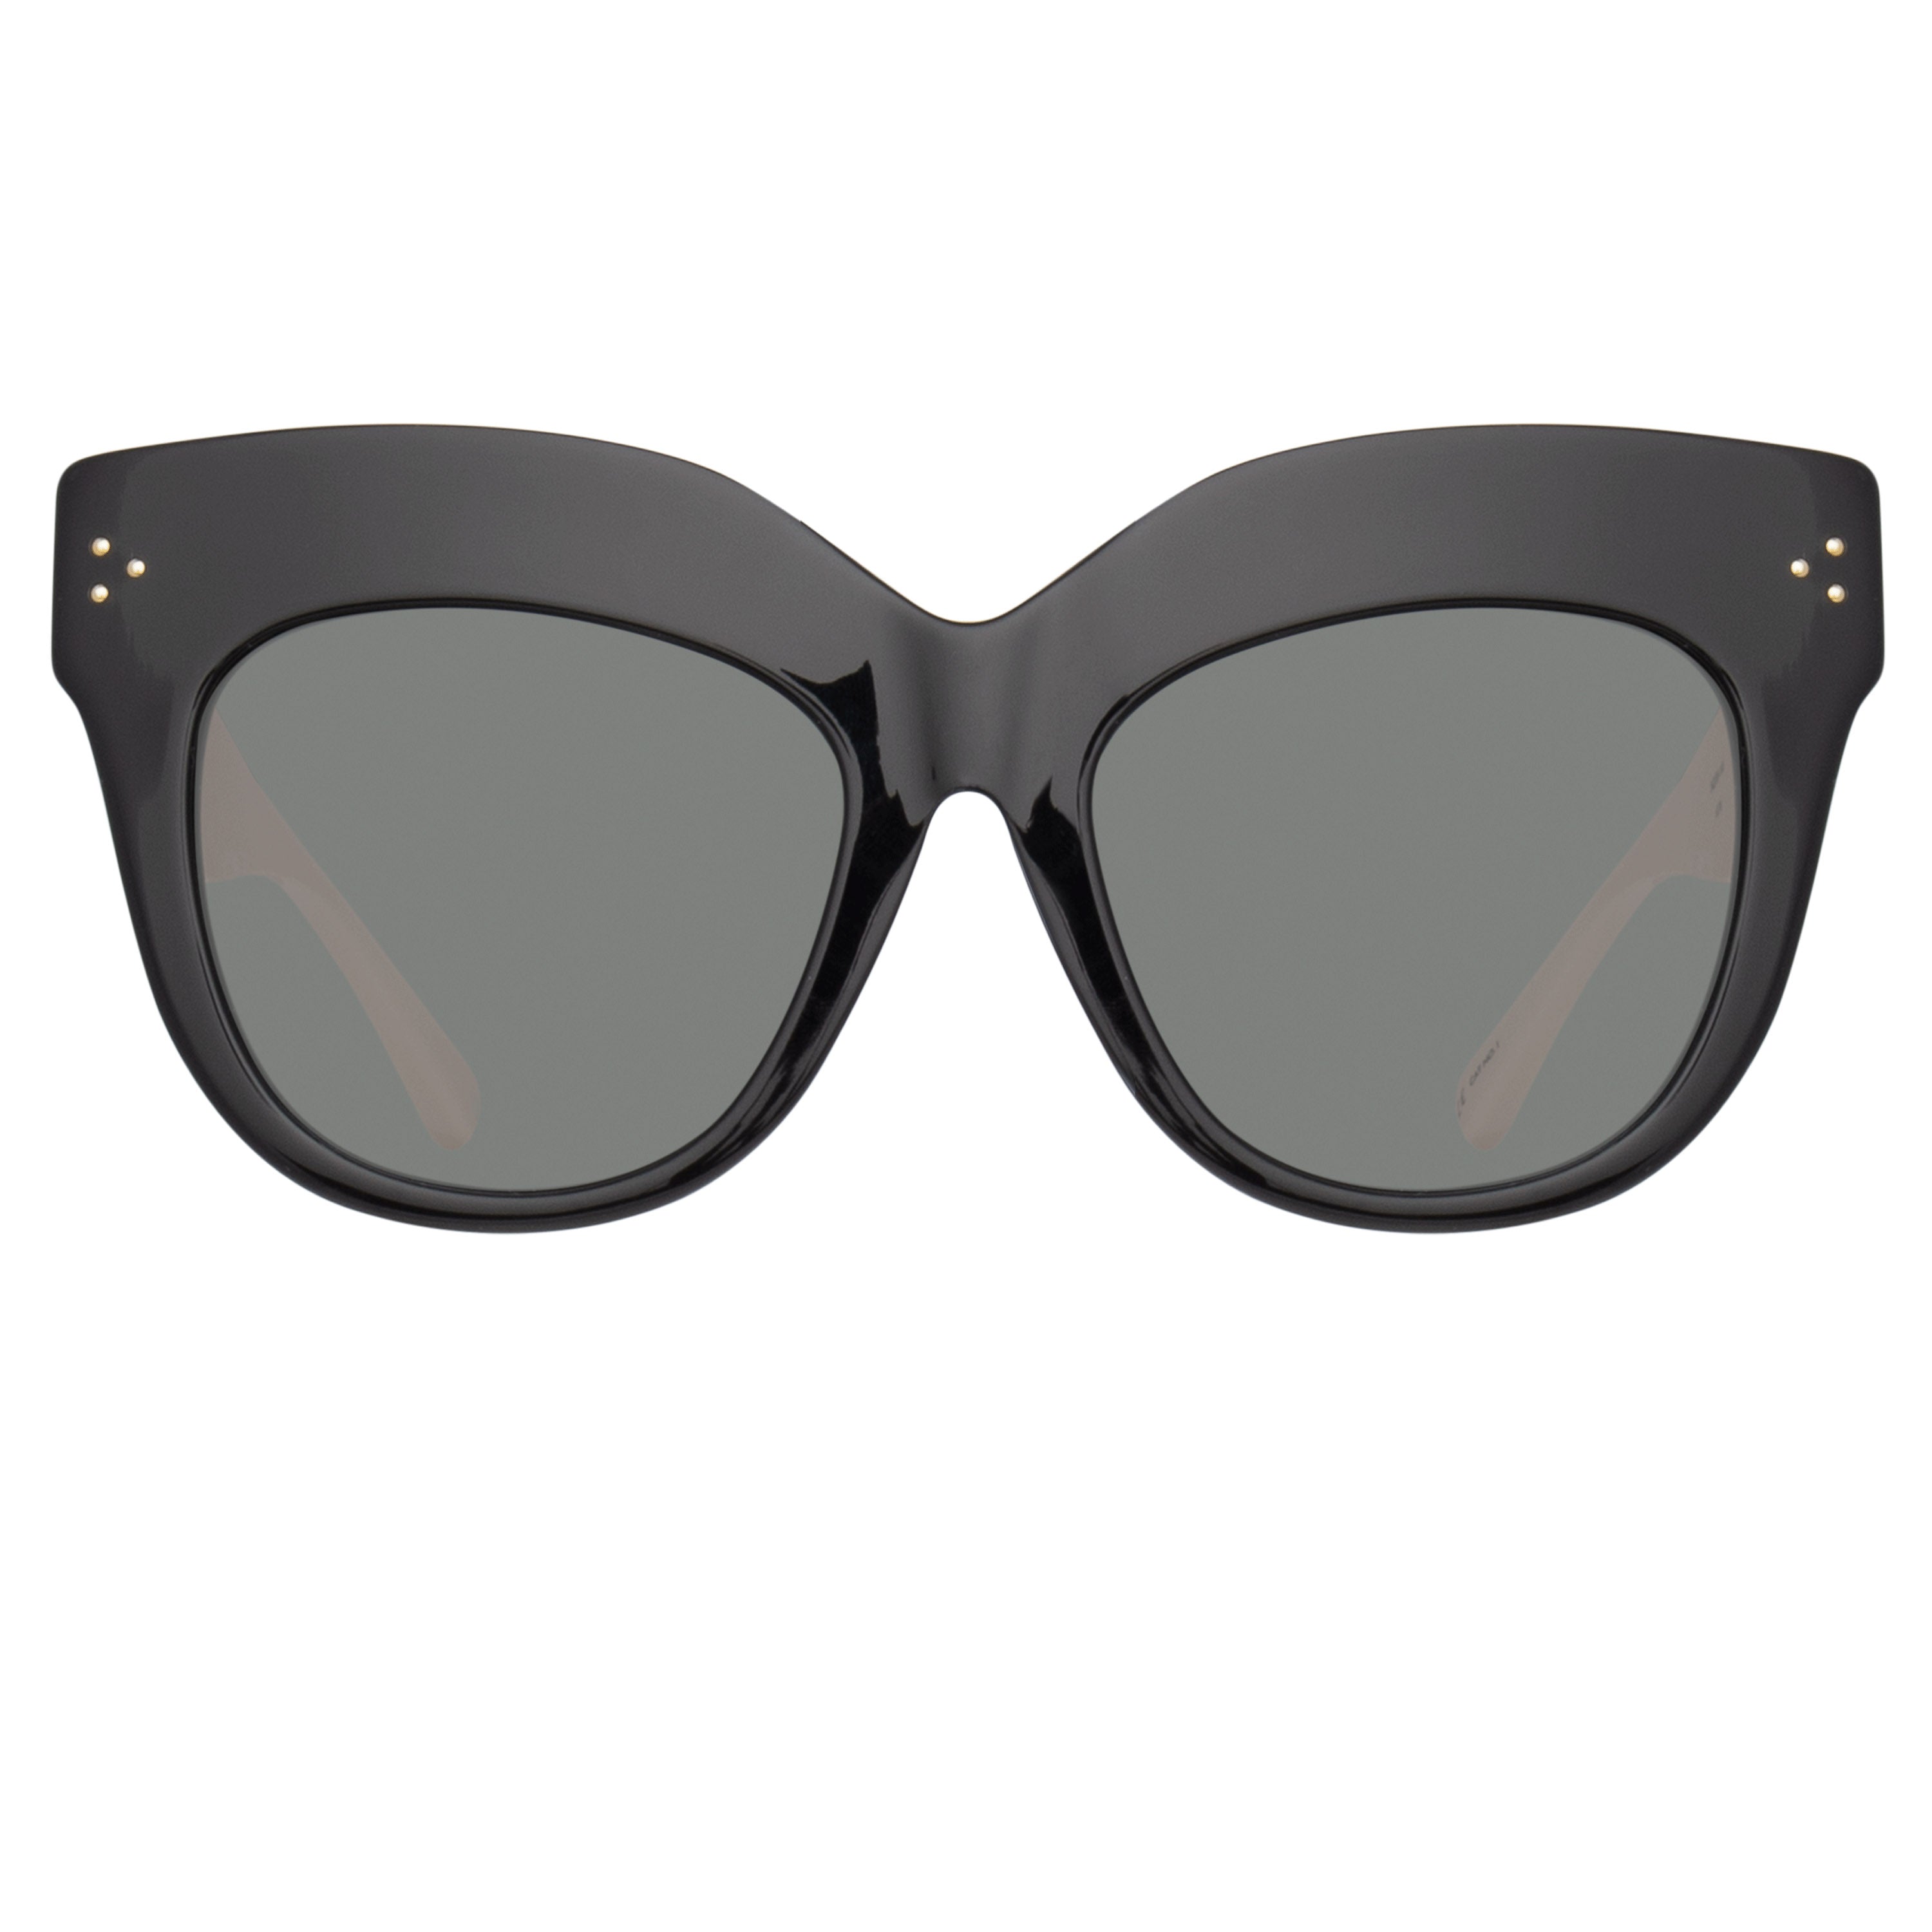 Dunaway Oversized Sunglasses in Black and Cream